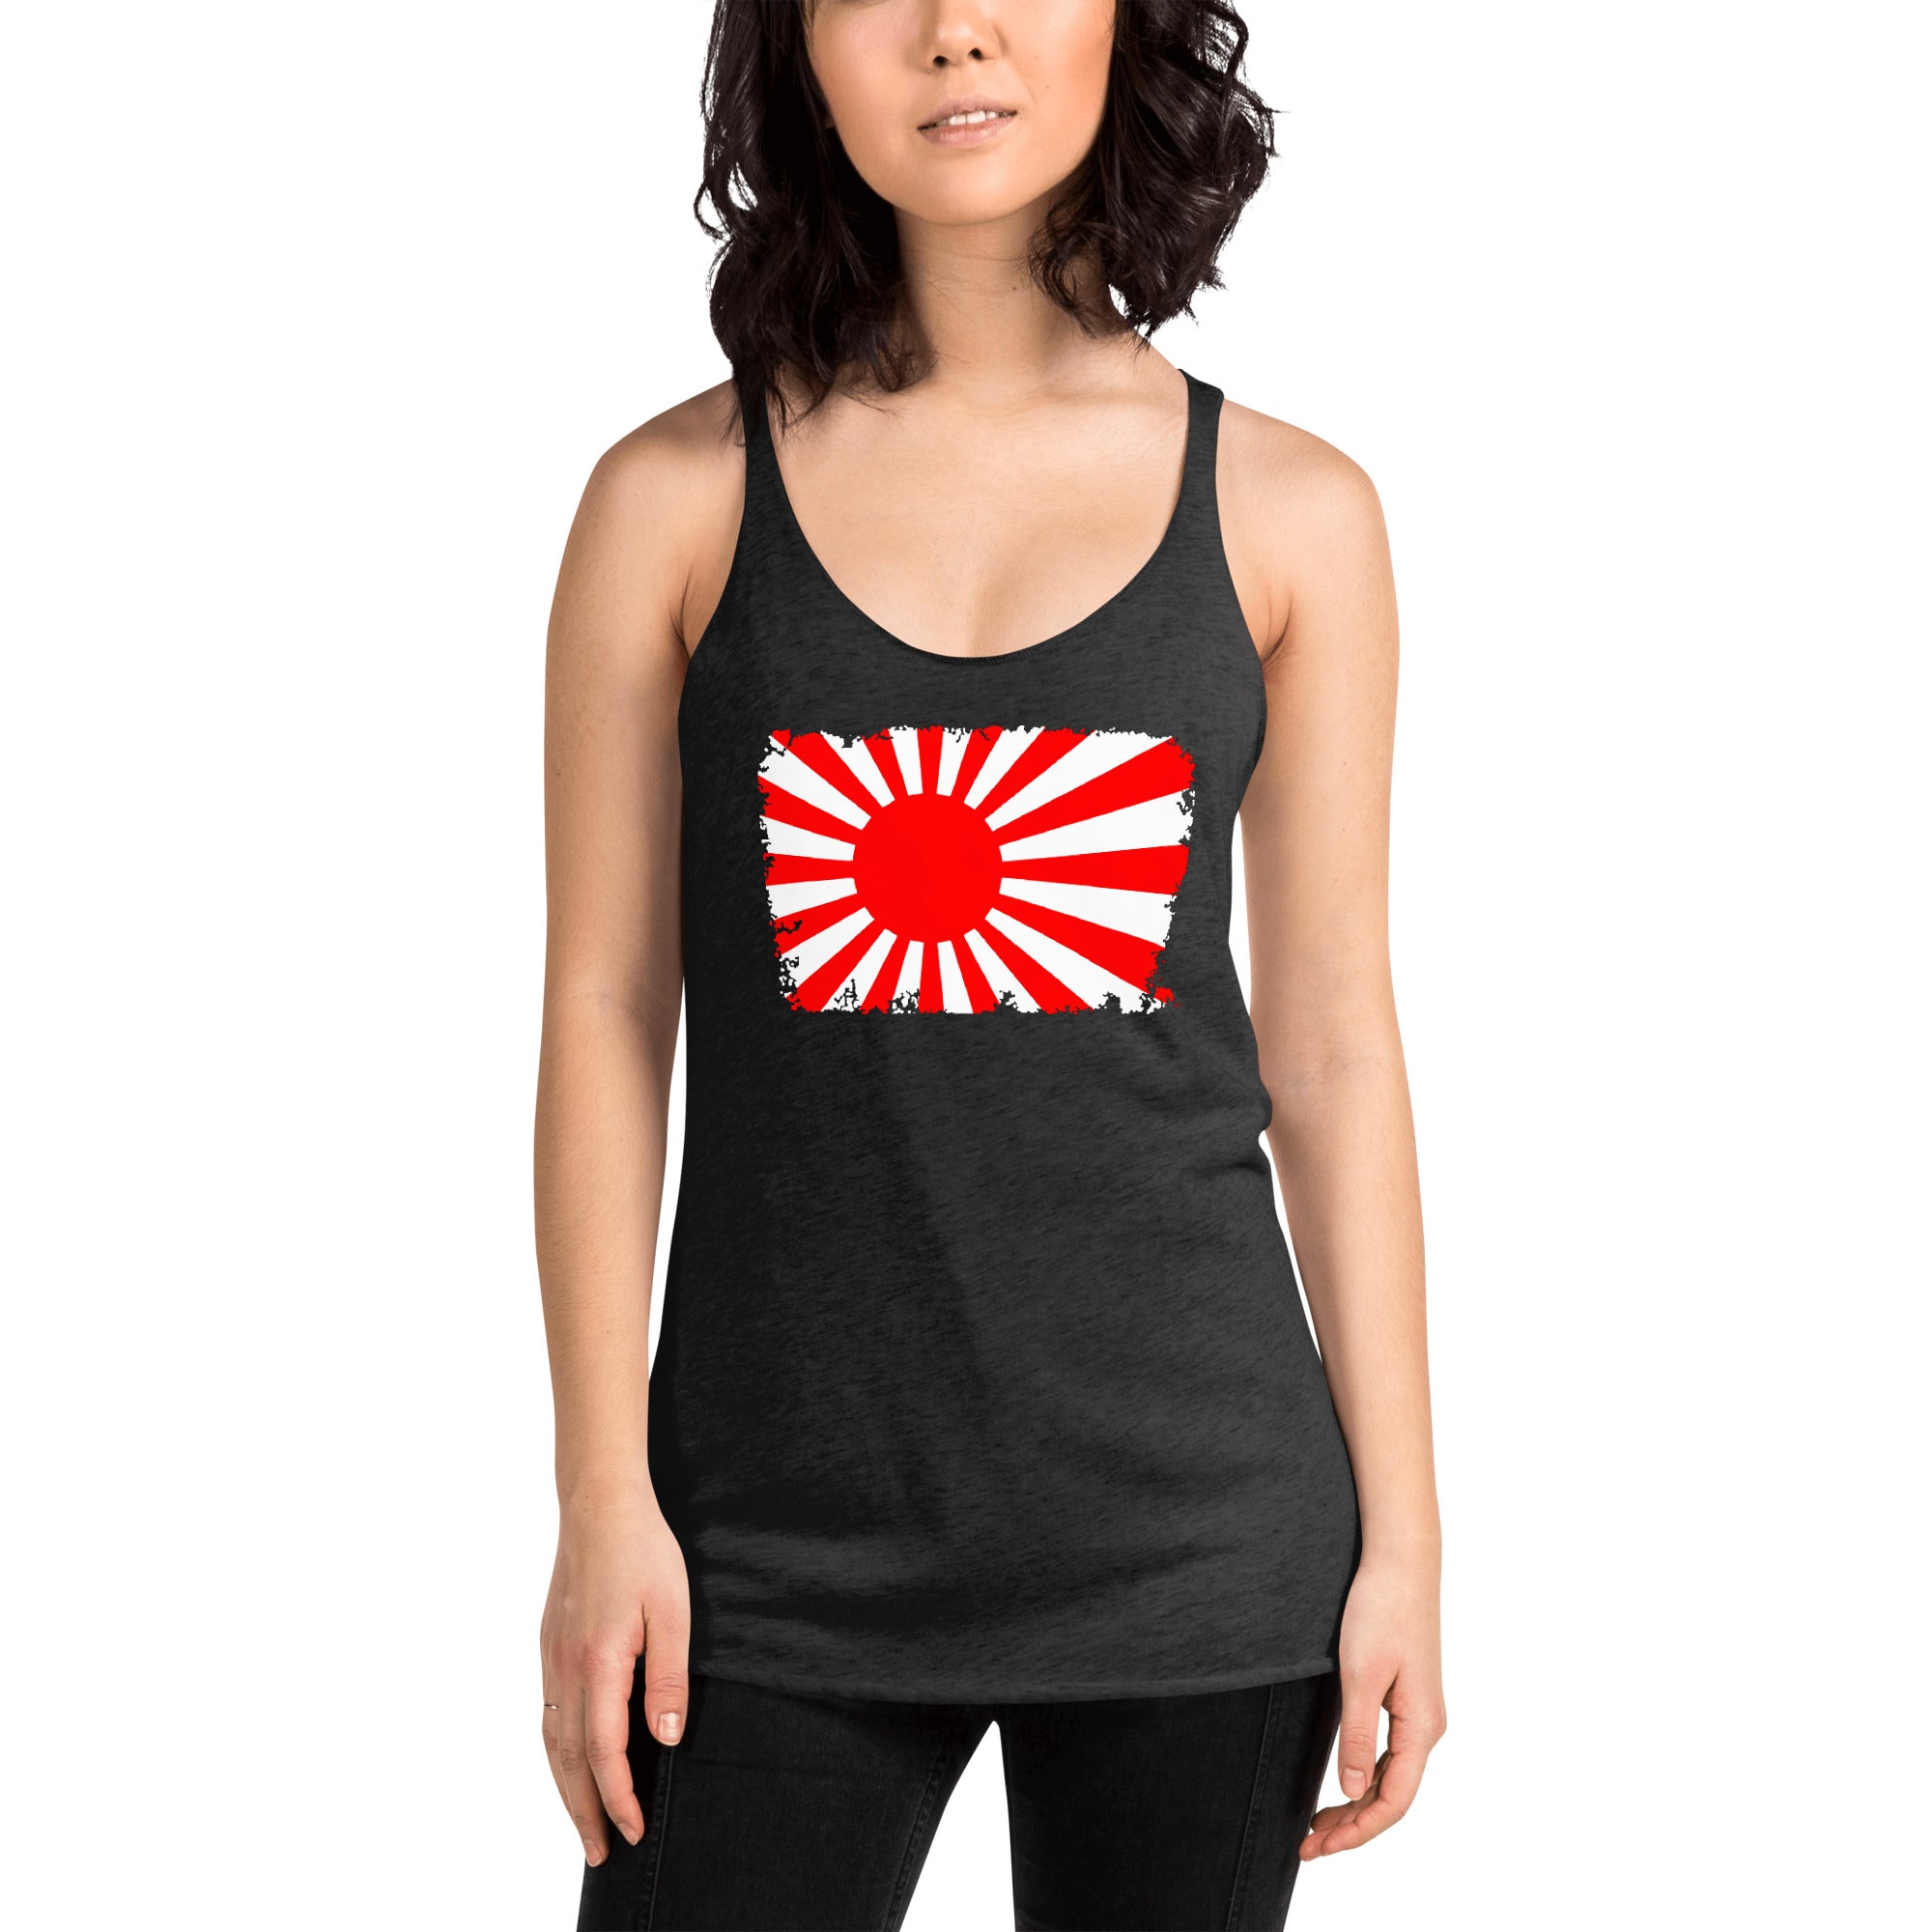 The National Flag of Japan Land of the Rising Sun Women's Racerback Tank Top Shirt